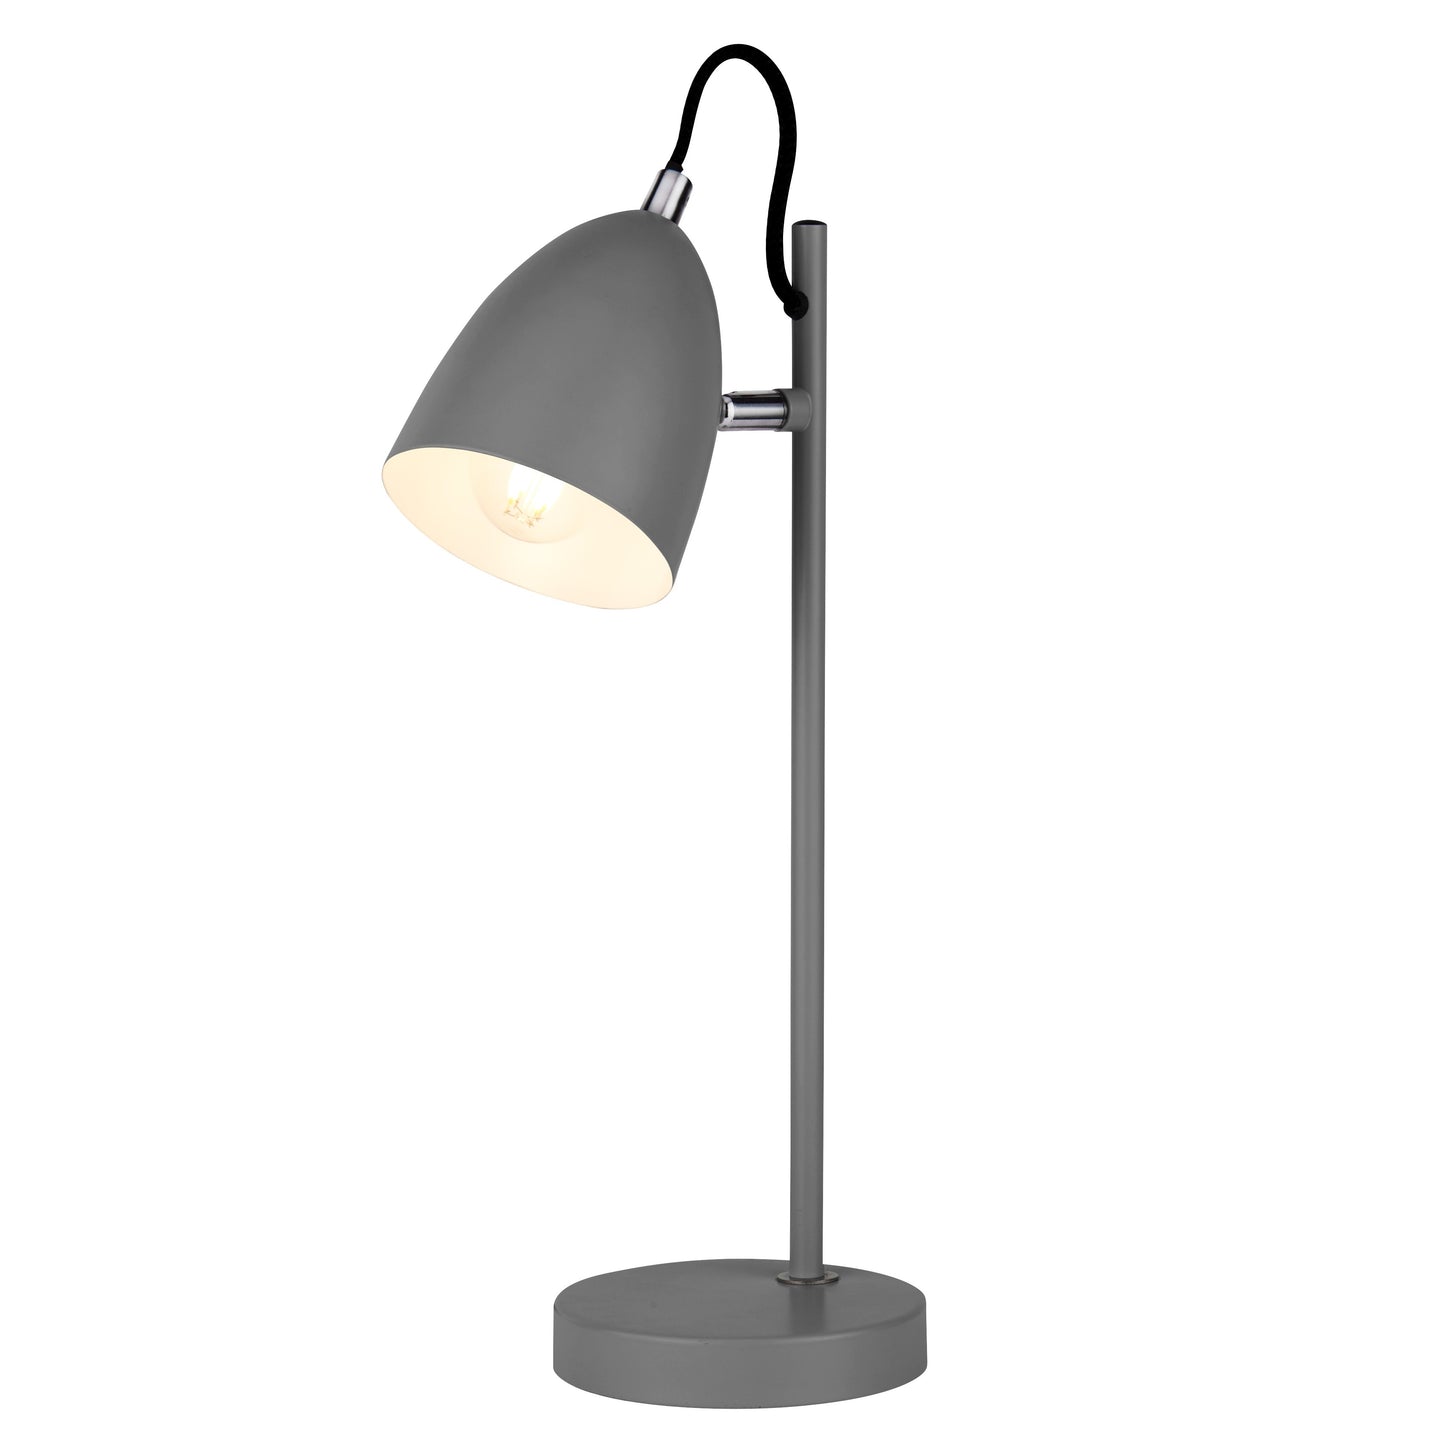 CGC KOBIE Large Matt Grey Desk Table Lamp Task Light